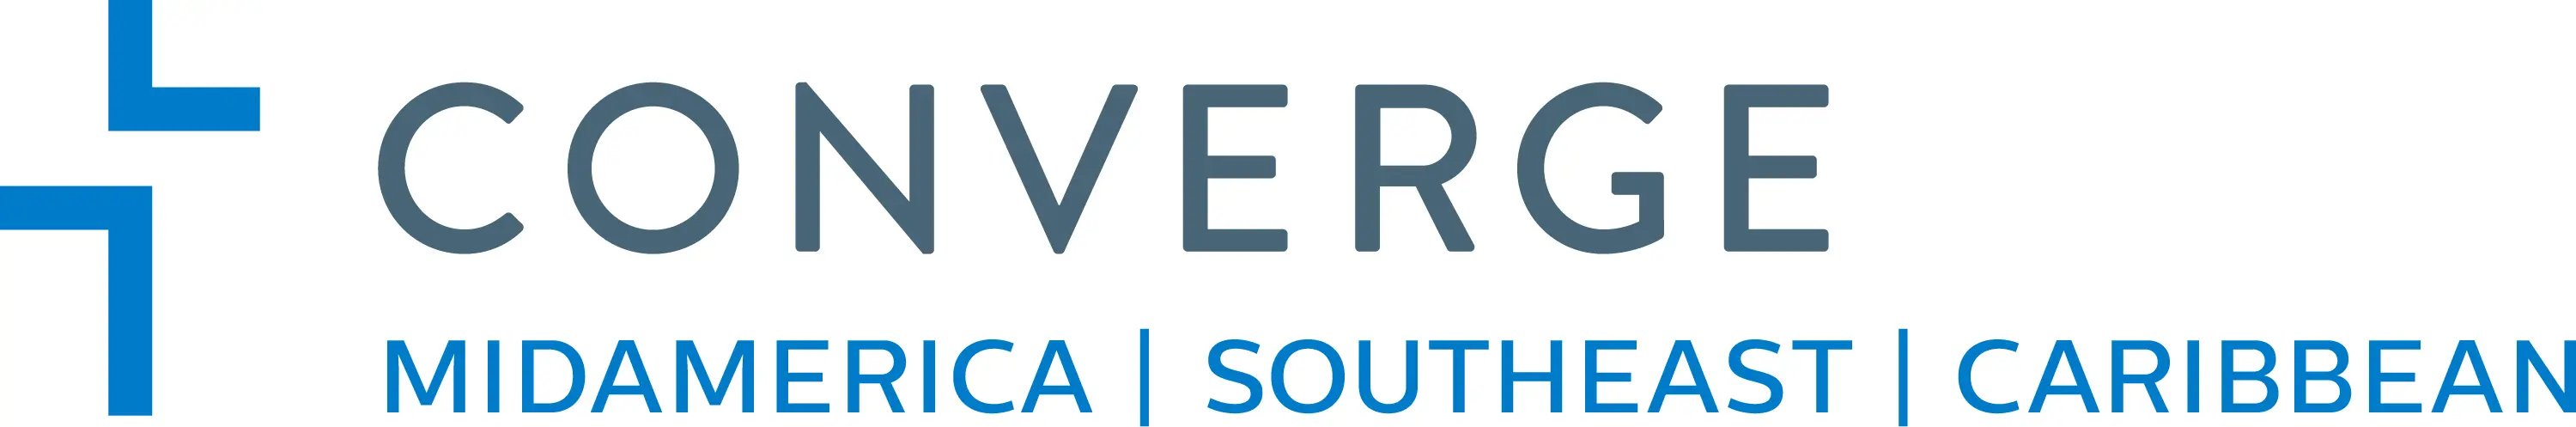 Converge MidAmerica logo